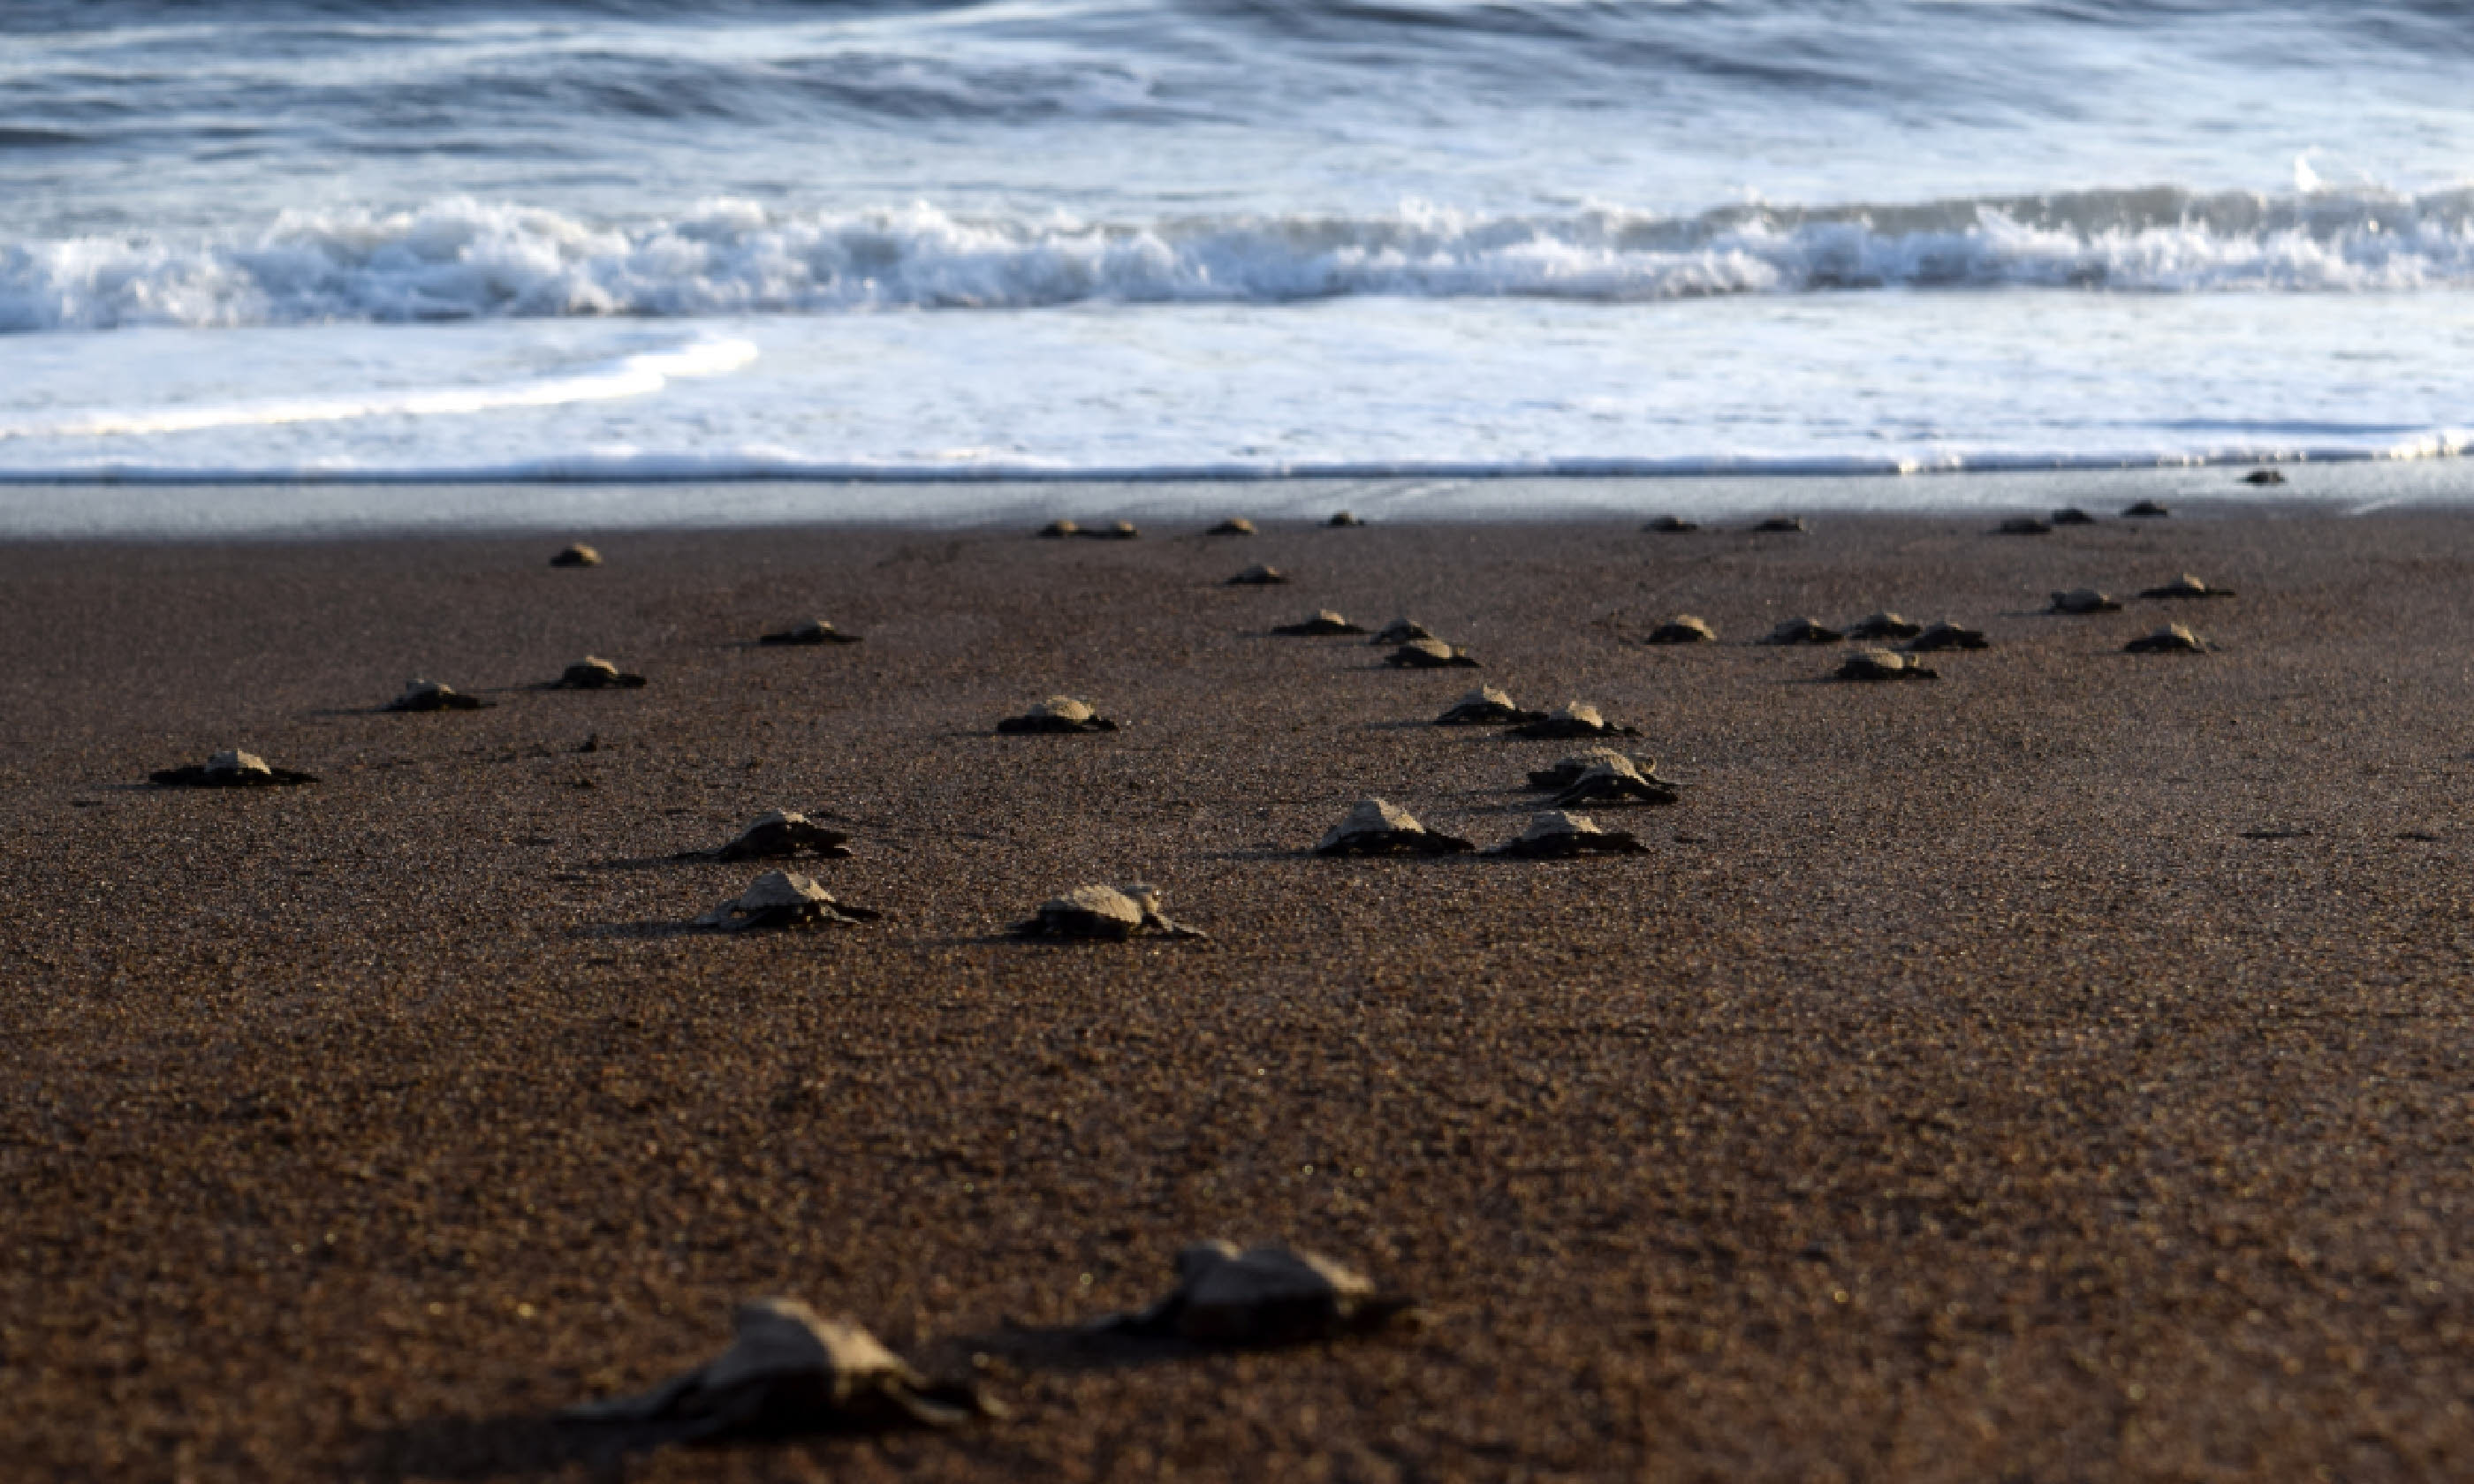 Turtles heading to the sea, Costa Rica (Dreamtime)